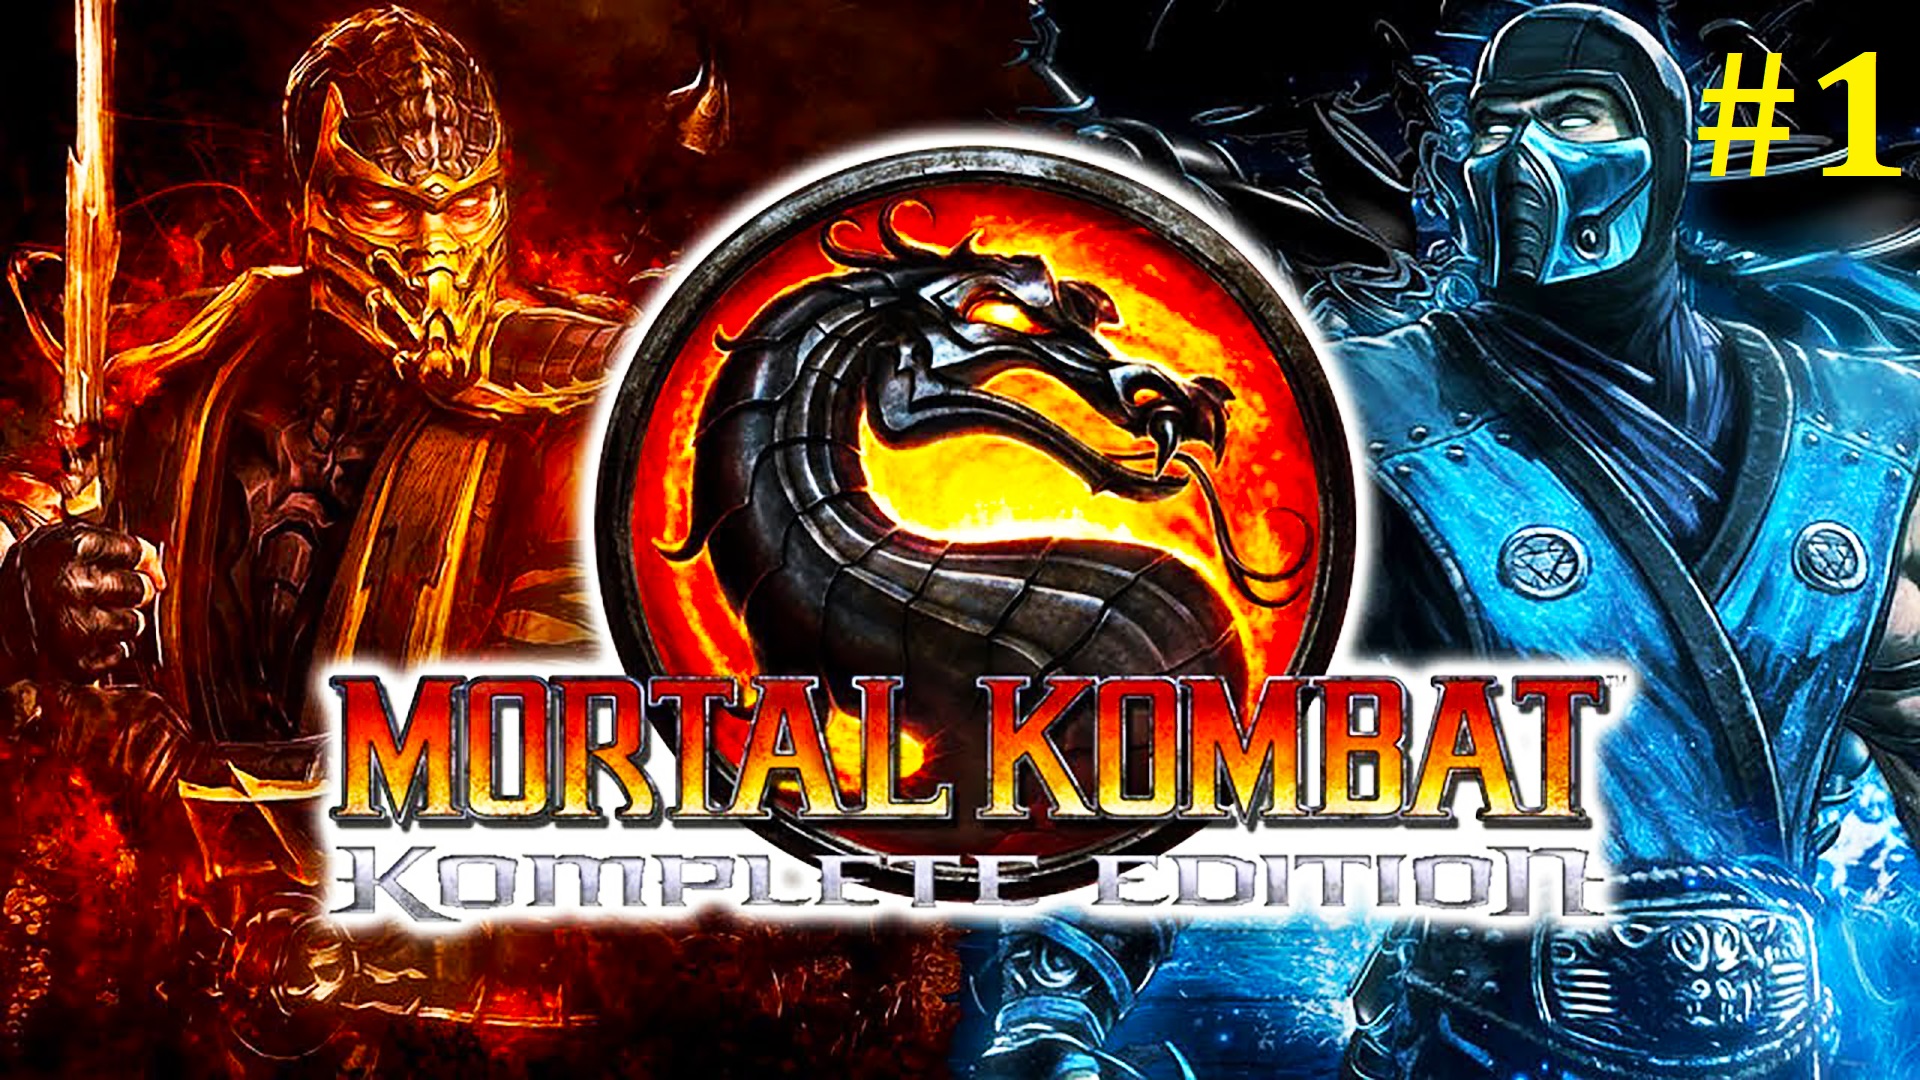 Мортал комбат 9 на компьютере. Mk9 Komplete Edition. Мортал комбат 9. Mortal Kombat Komplete Edition. Mortal Kombat 9.Komplete Edition (2011).